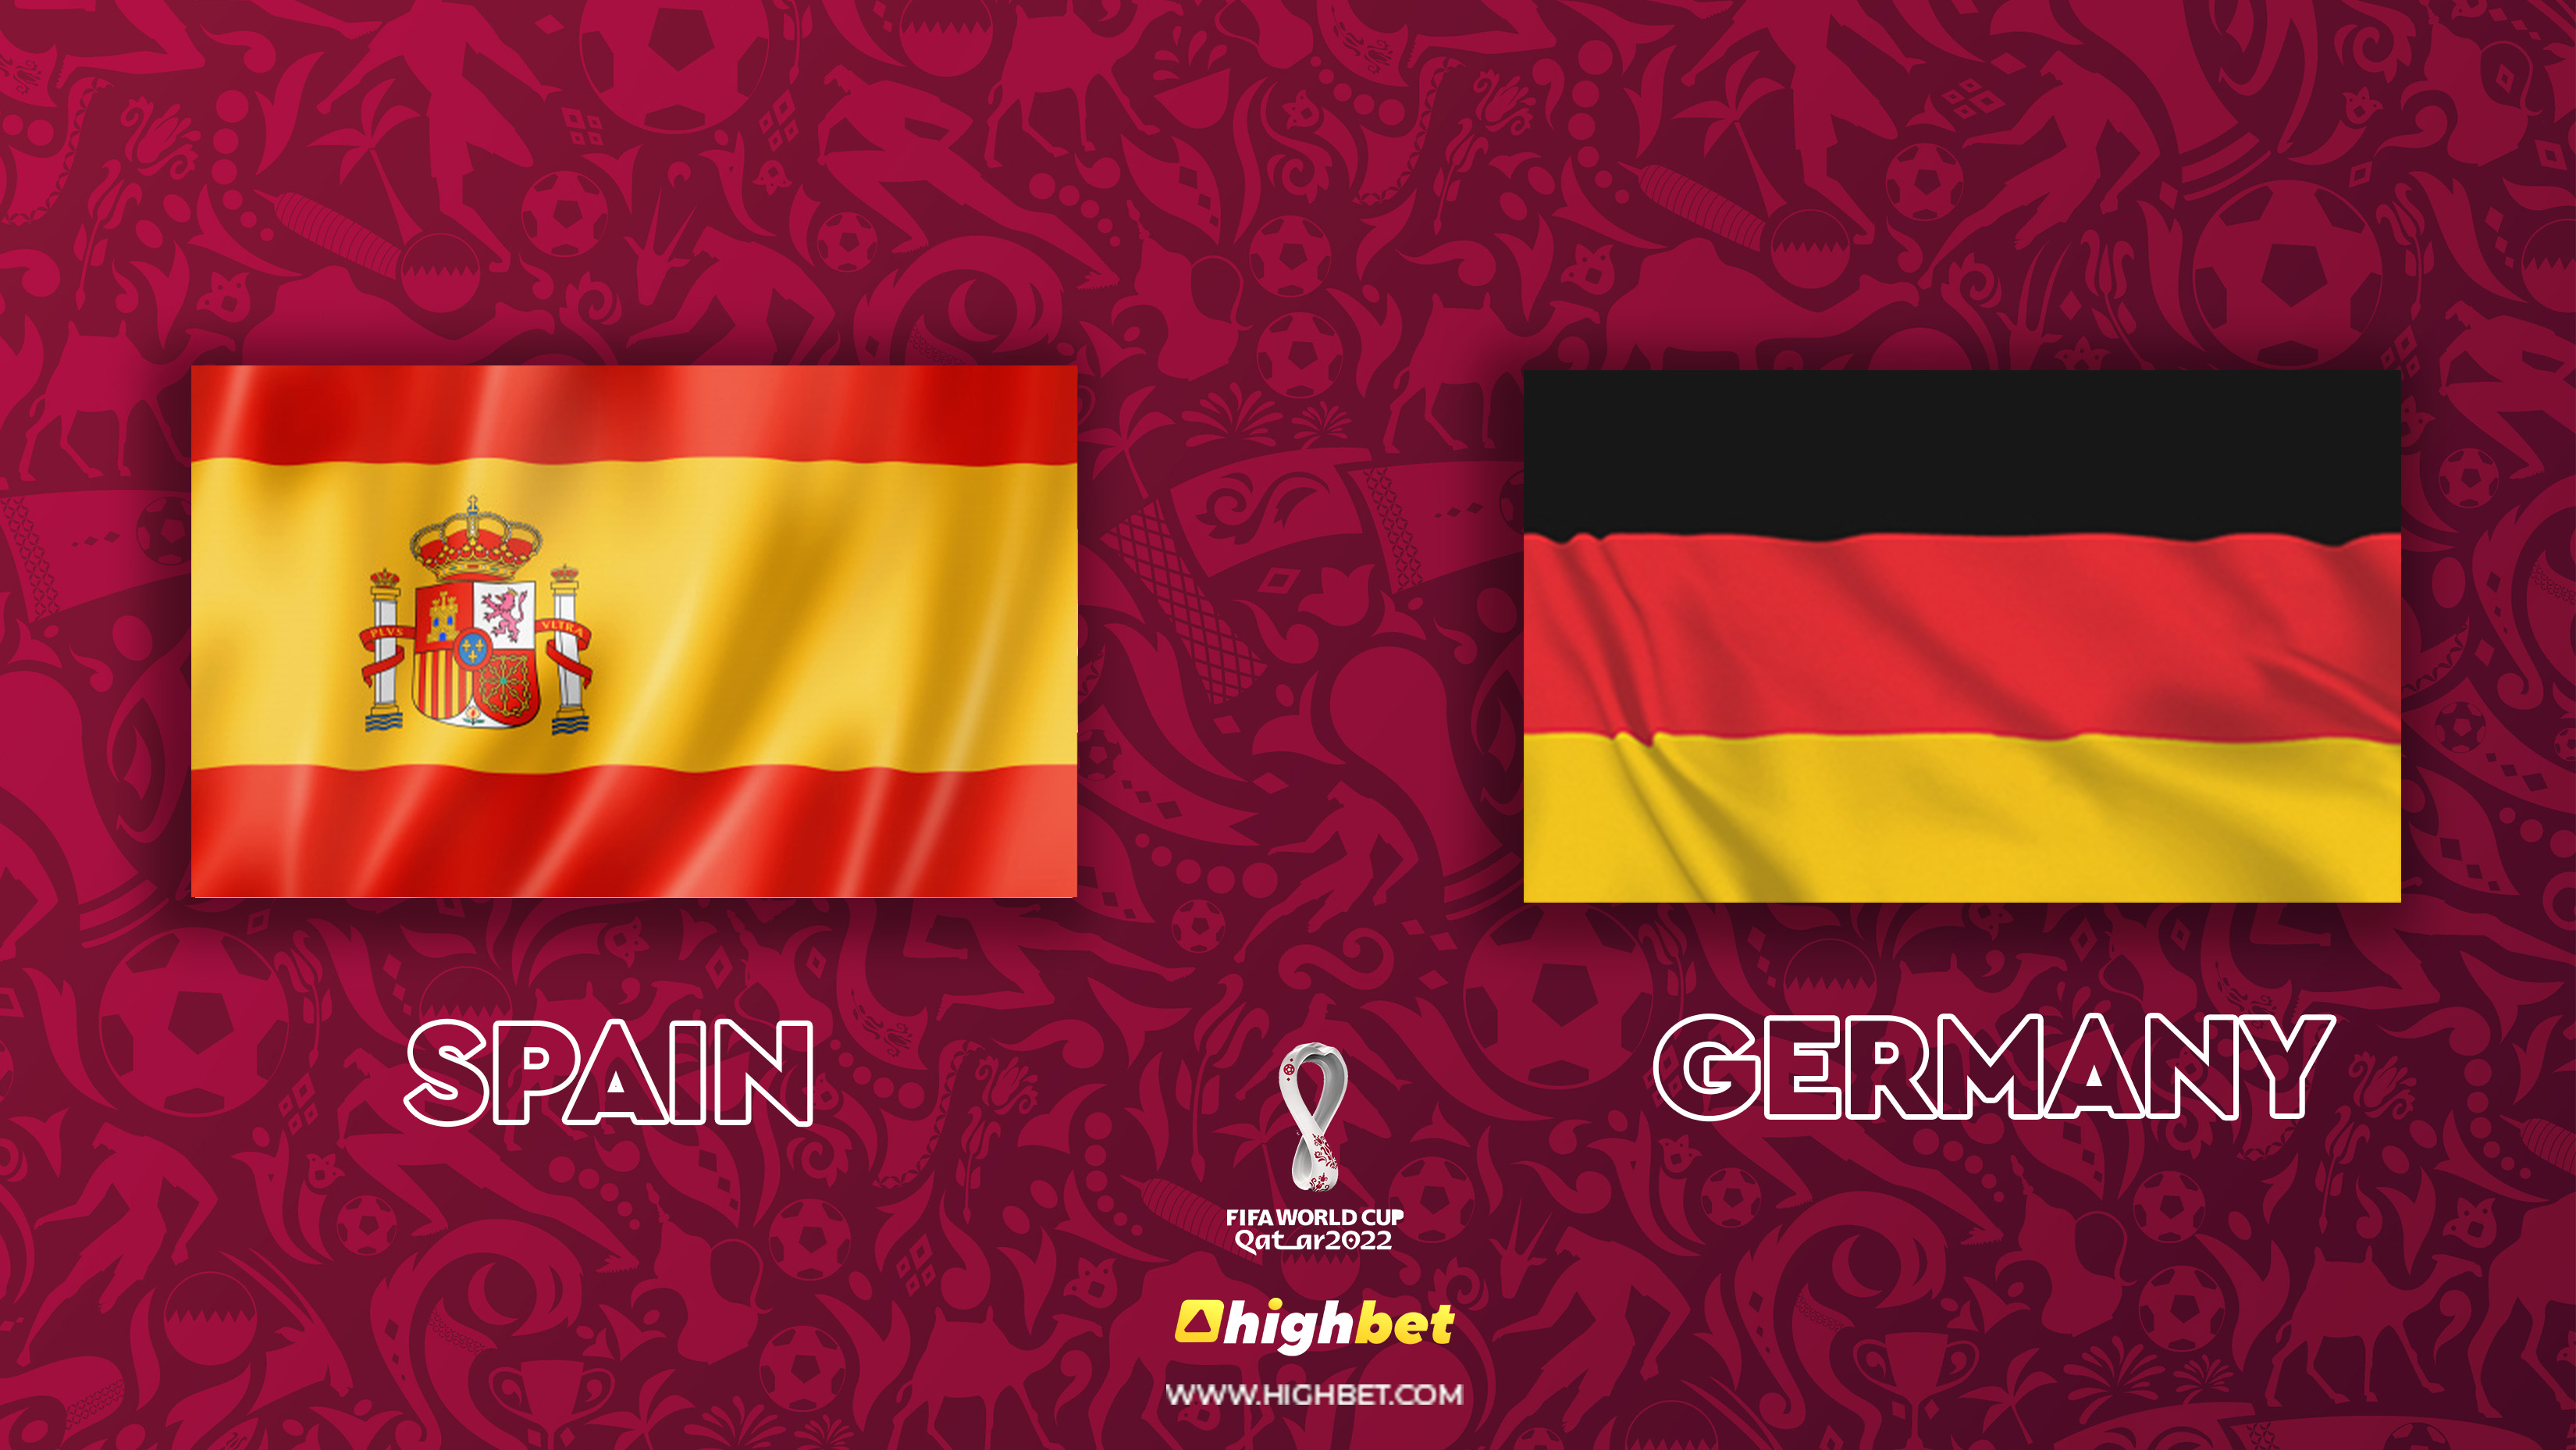 Spain vs Germany - highbet World Cup 2022 Pre-Match Analysis